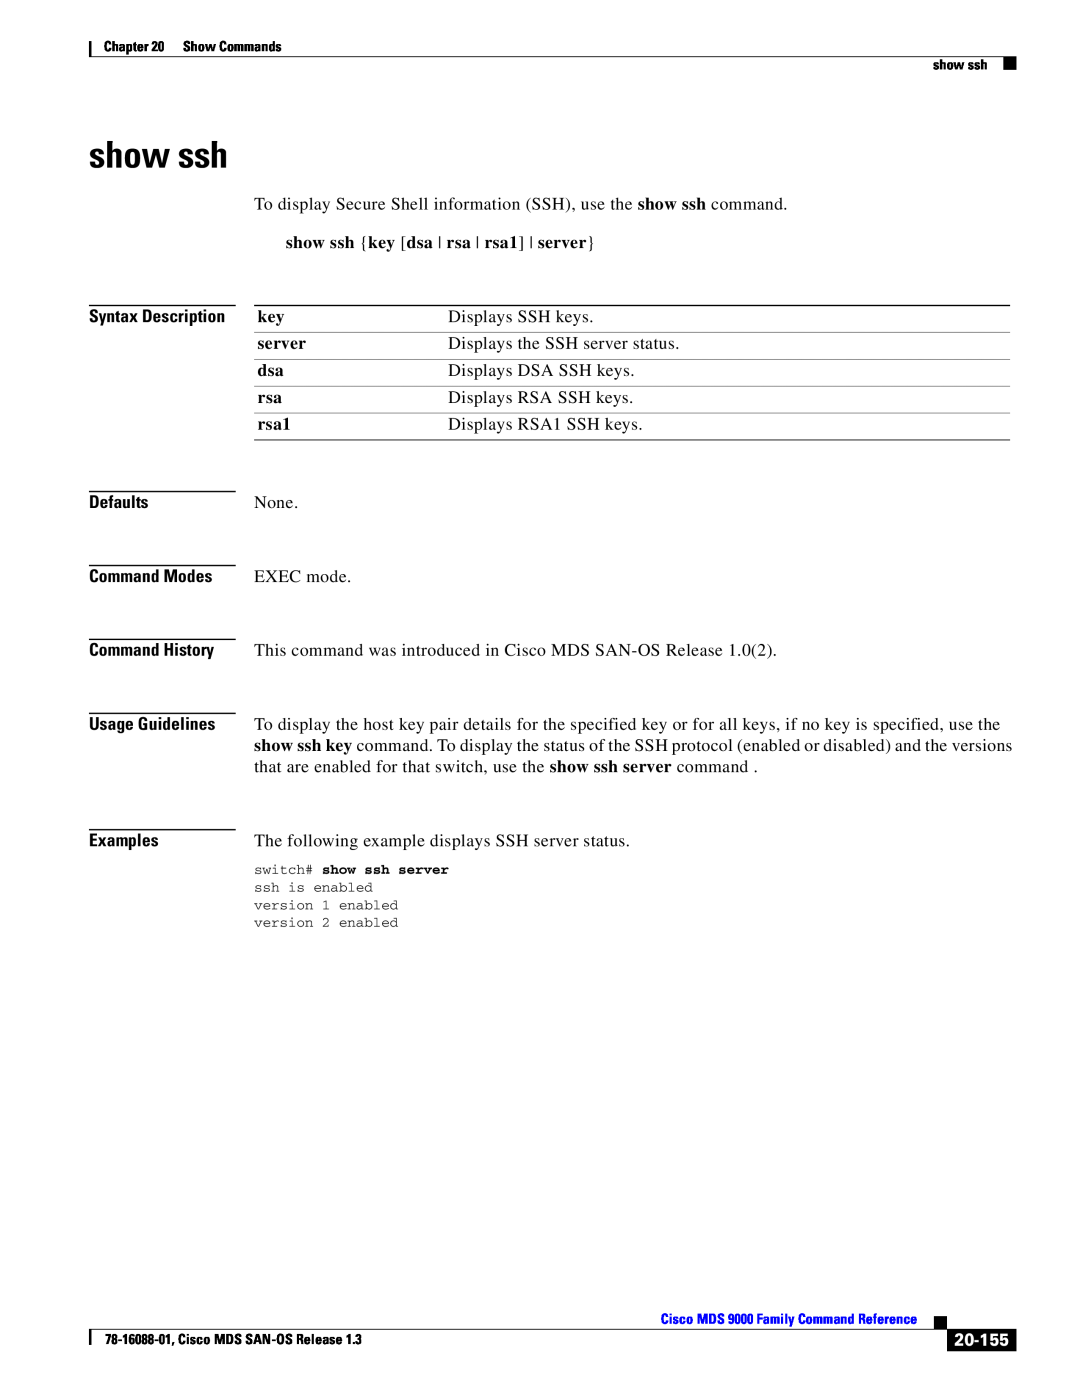 Cisco Systems MDS 9000 manual show ssh key dsa rsa rsa1 server, 20-155, Usage Guidelines Examples 